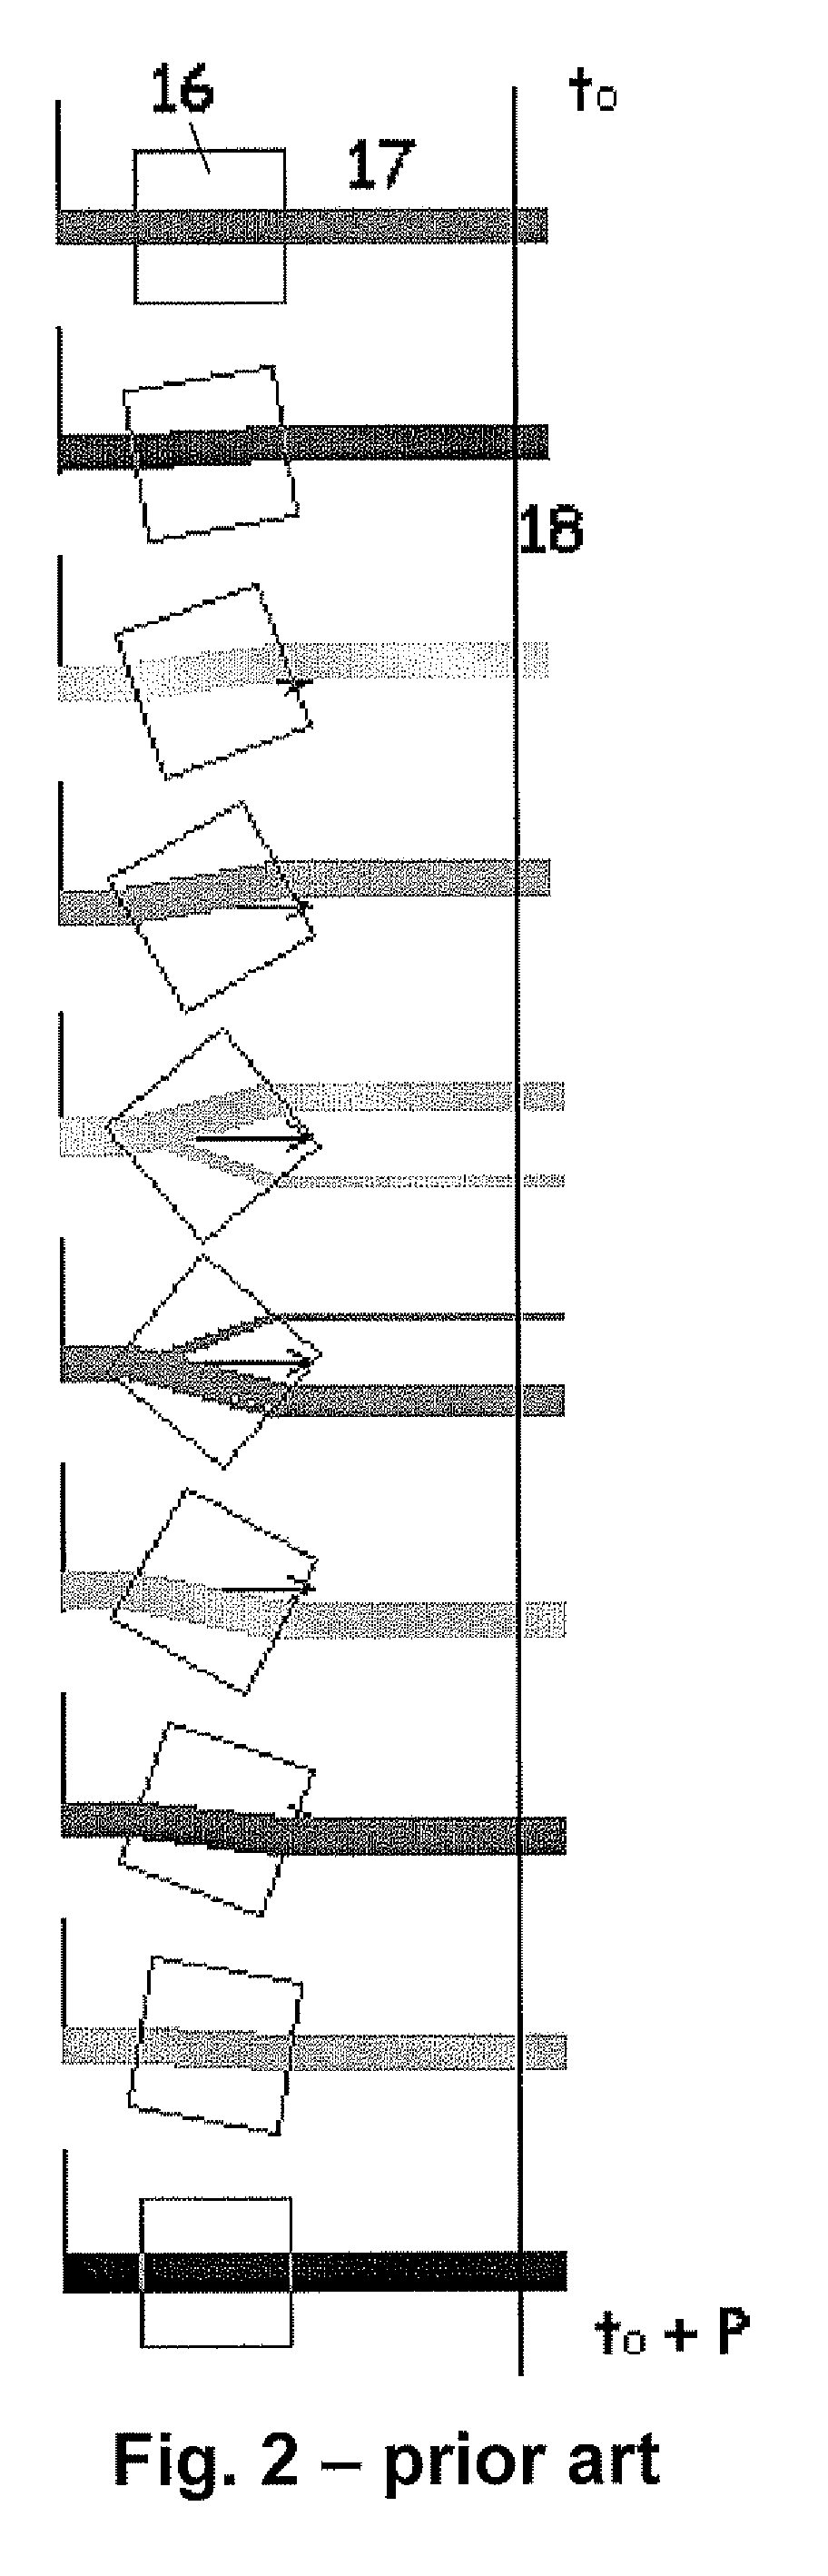 Split scrolling illumination for light modulator panels